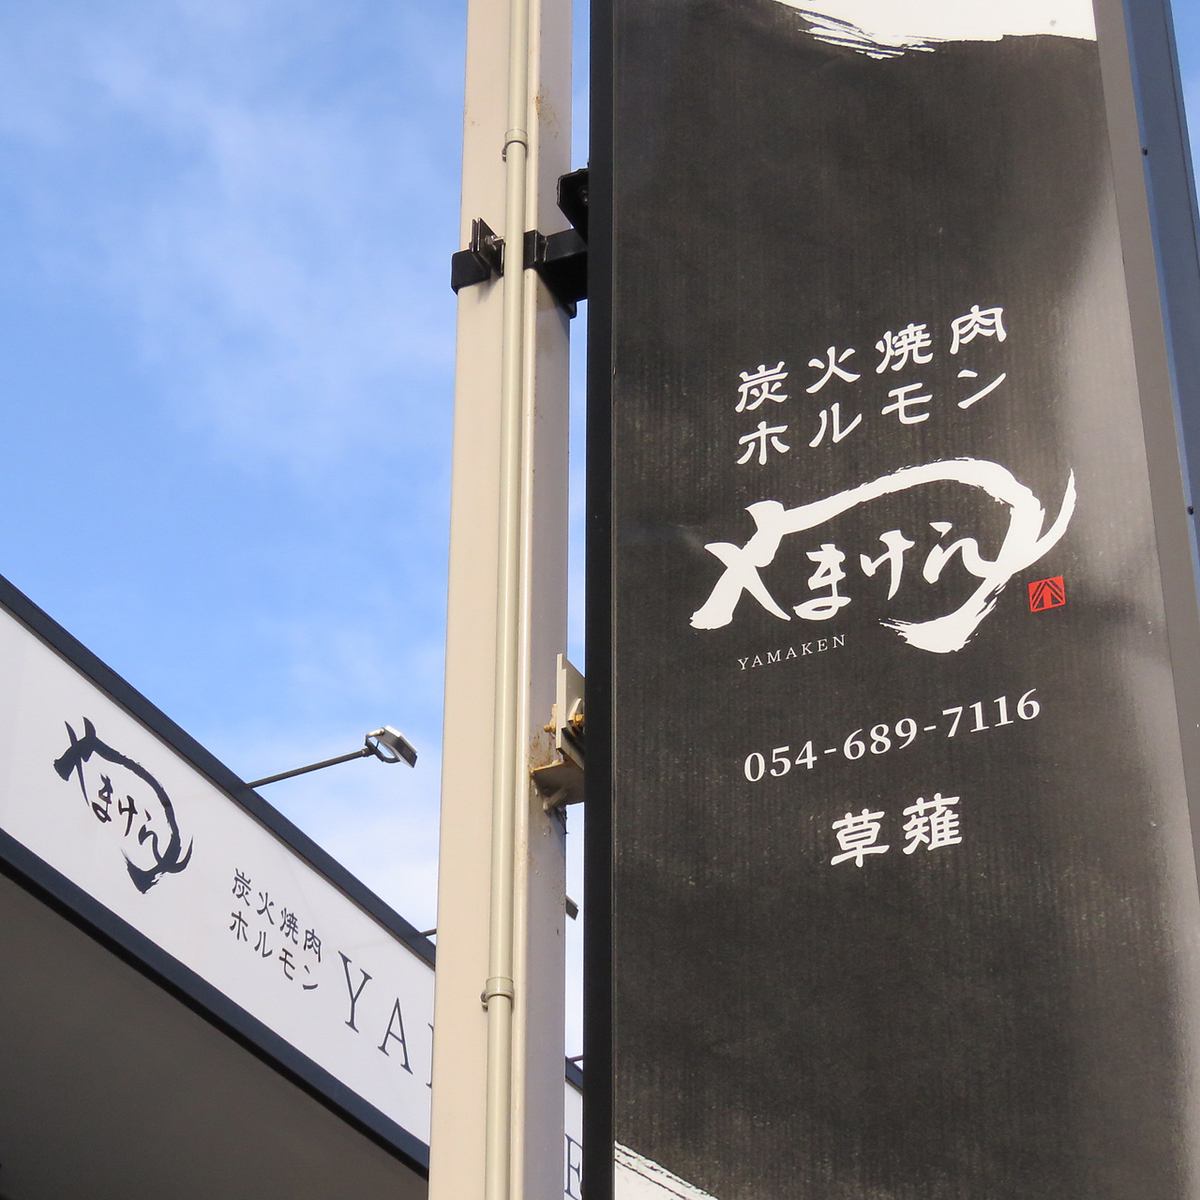 人气商店 Yamaken 在草薙新开张！！